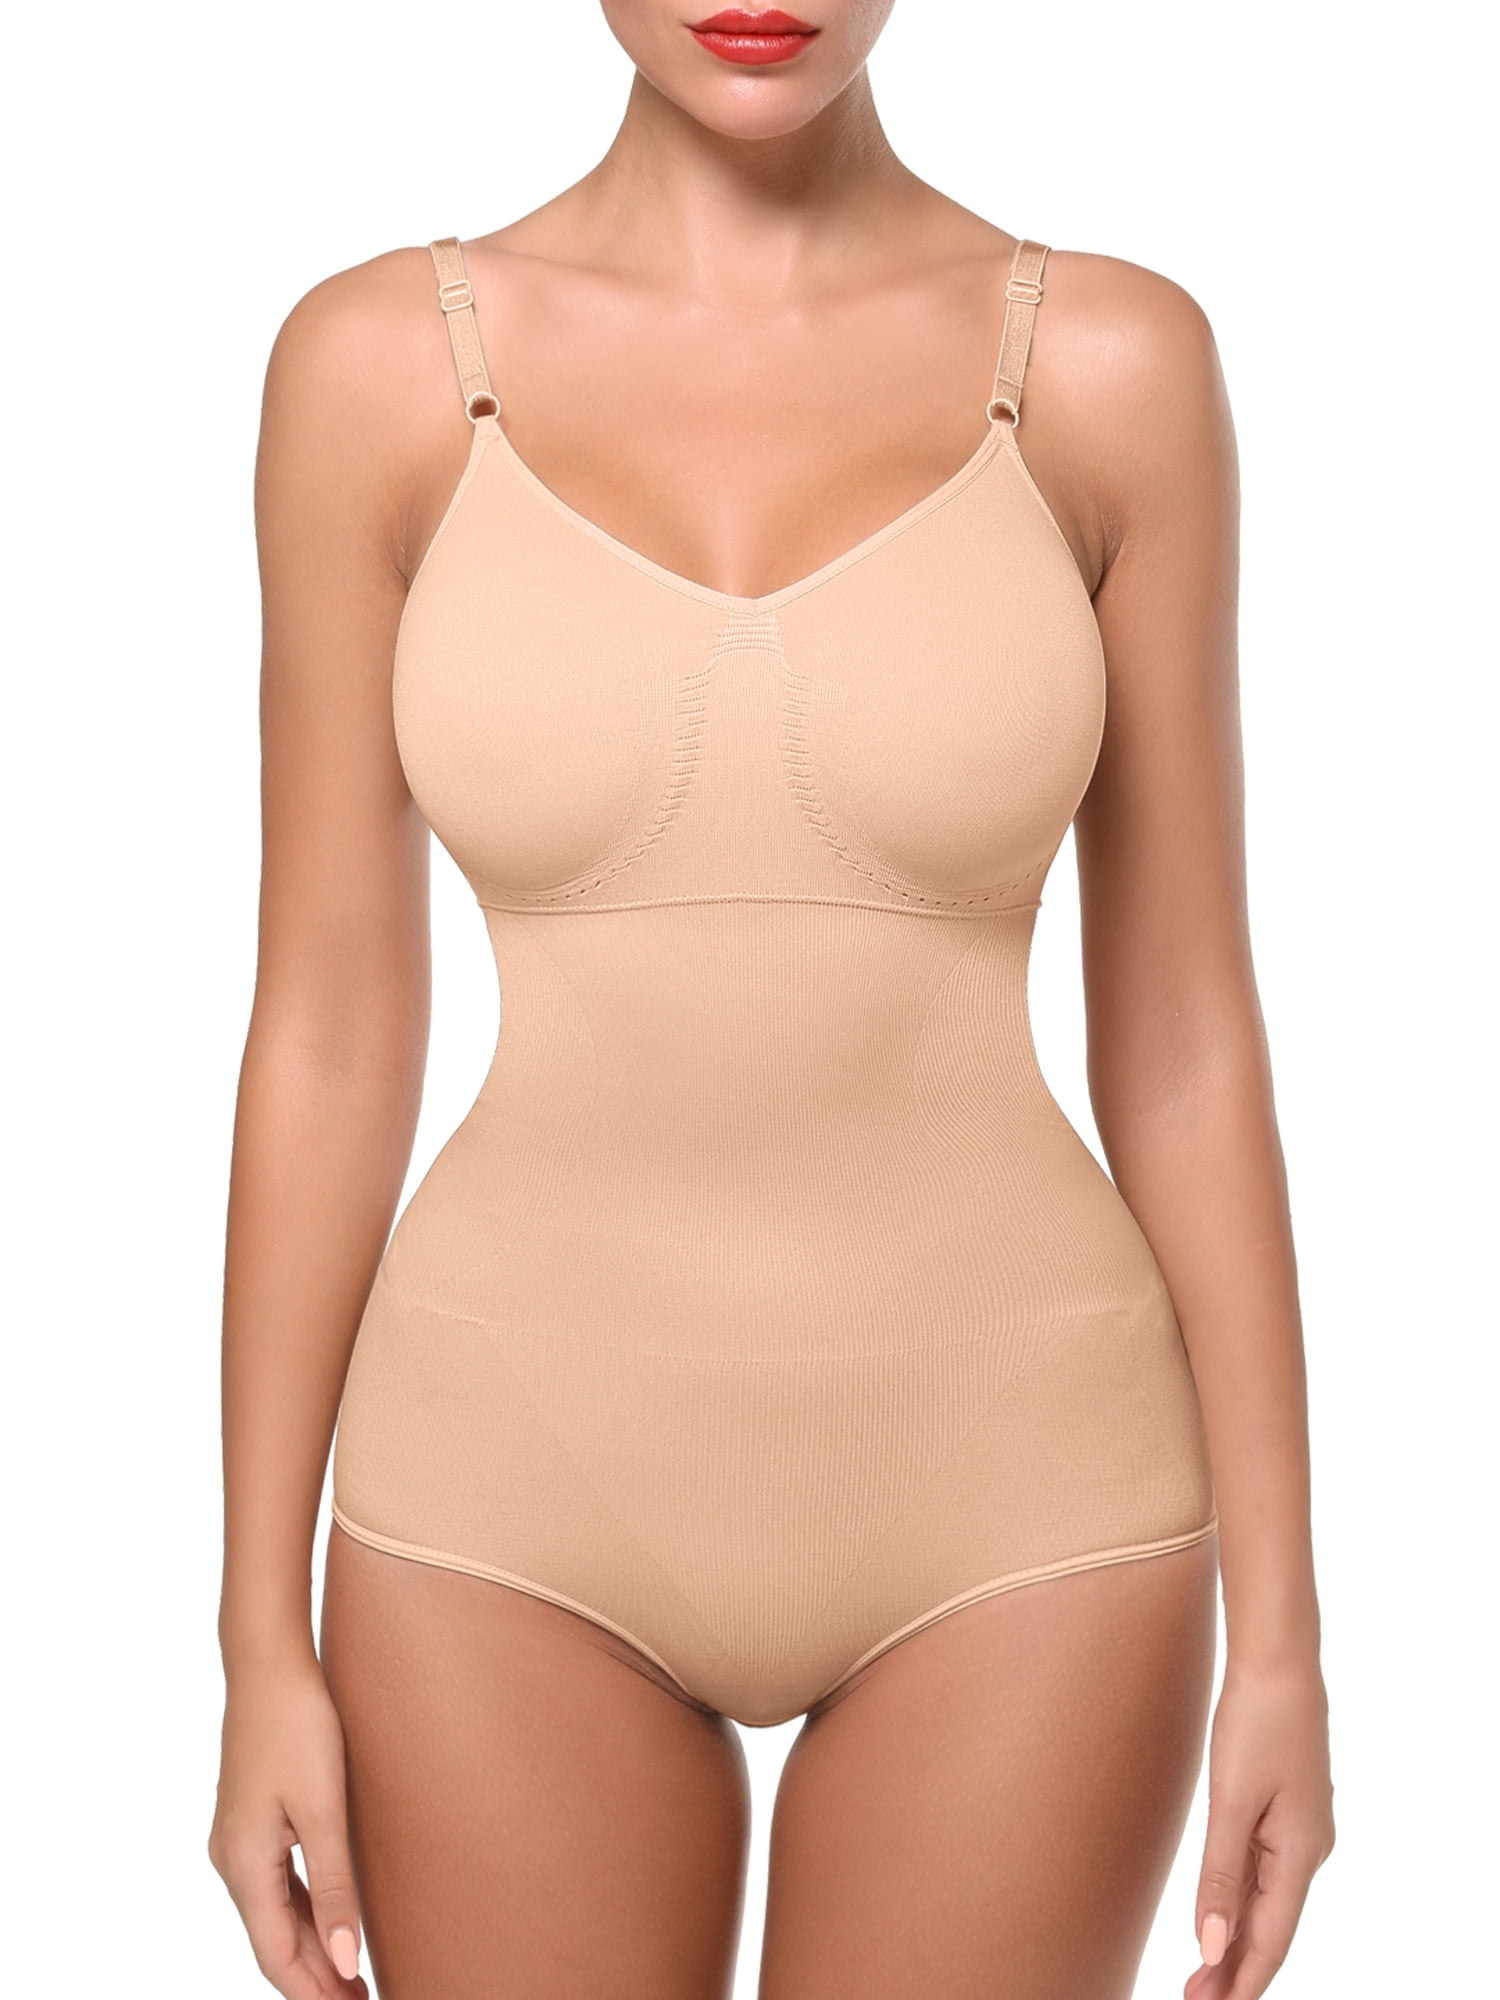 COMFREE Bodysuit for Women Tummy Control Shapewear Seamless